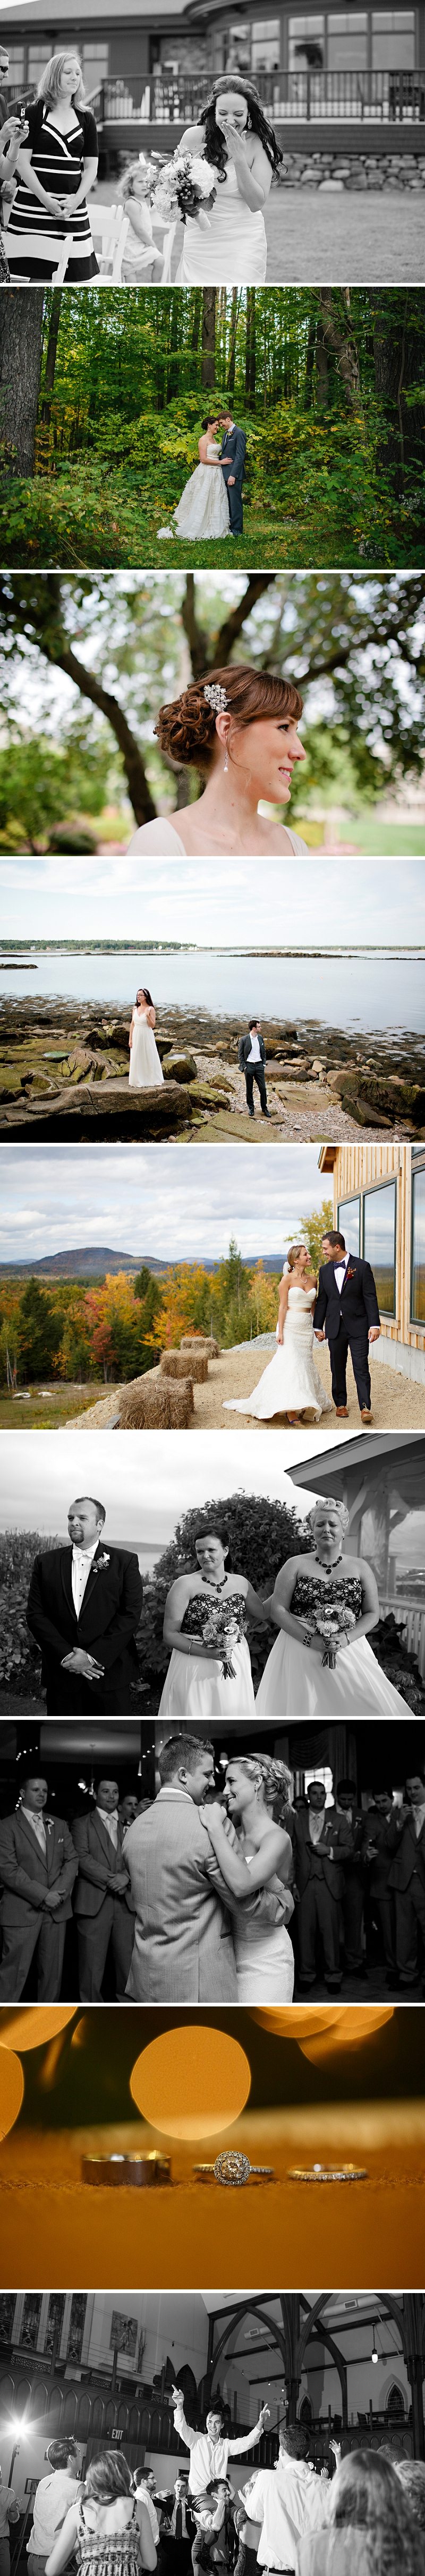 Maine-wedding-photographer-best-wedding-photos-of-2014-0013